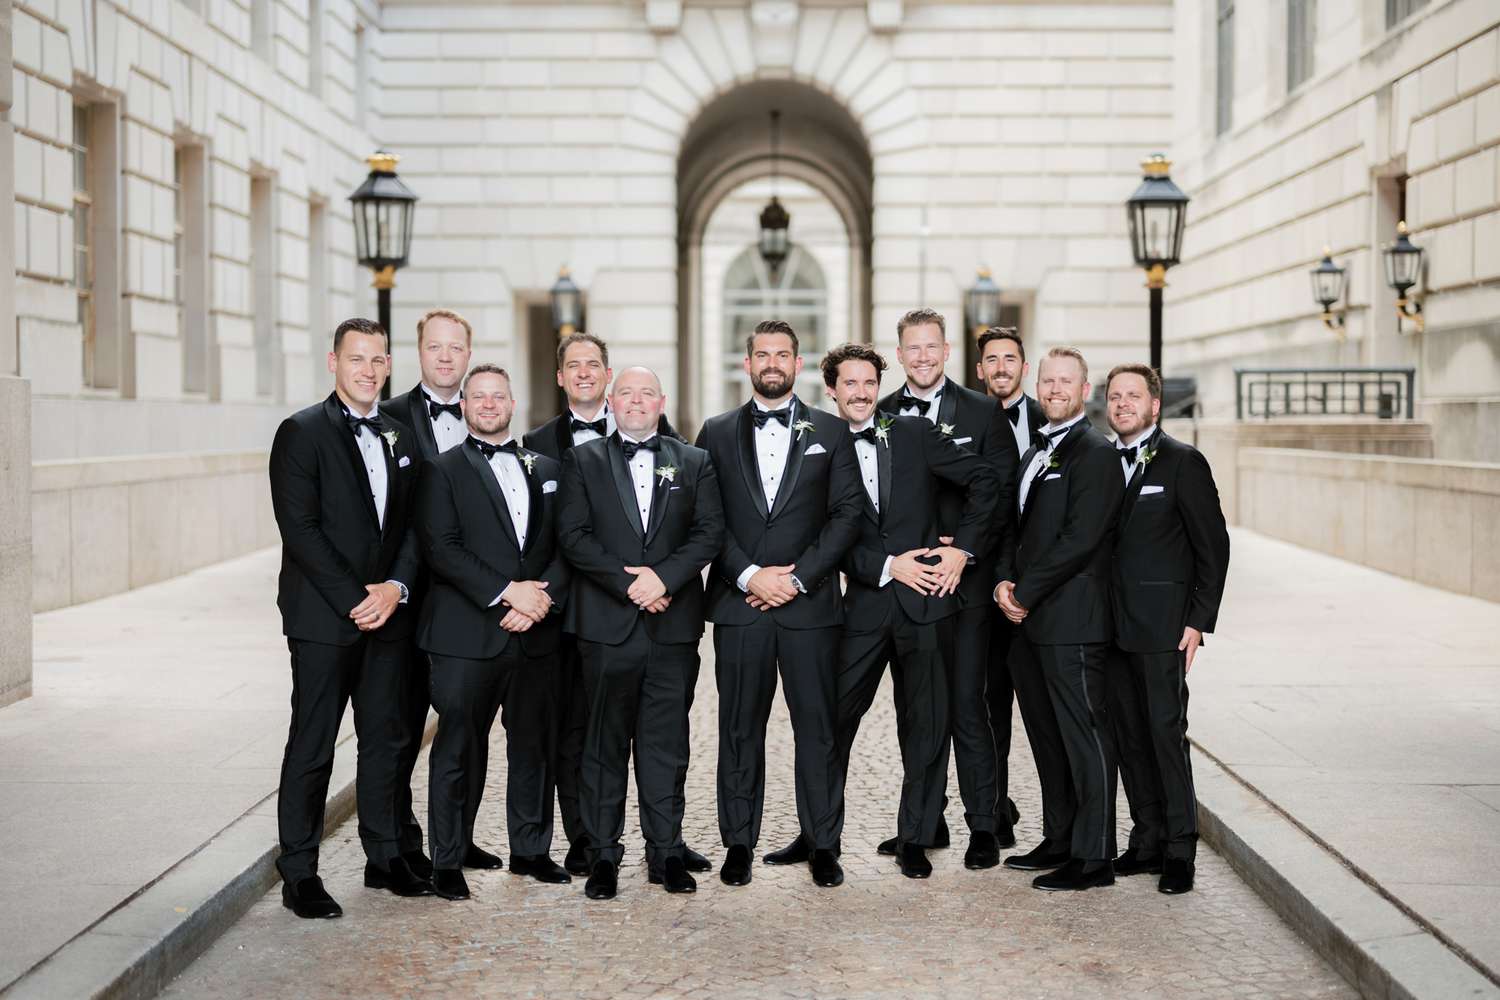 groom with groomsmen in tuxedos